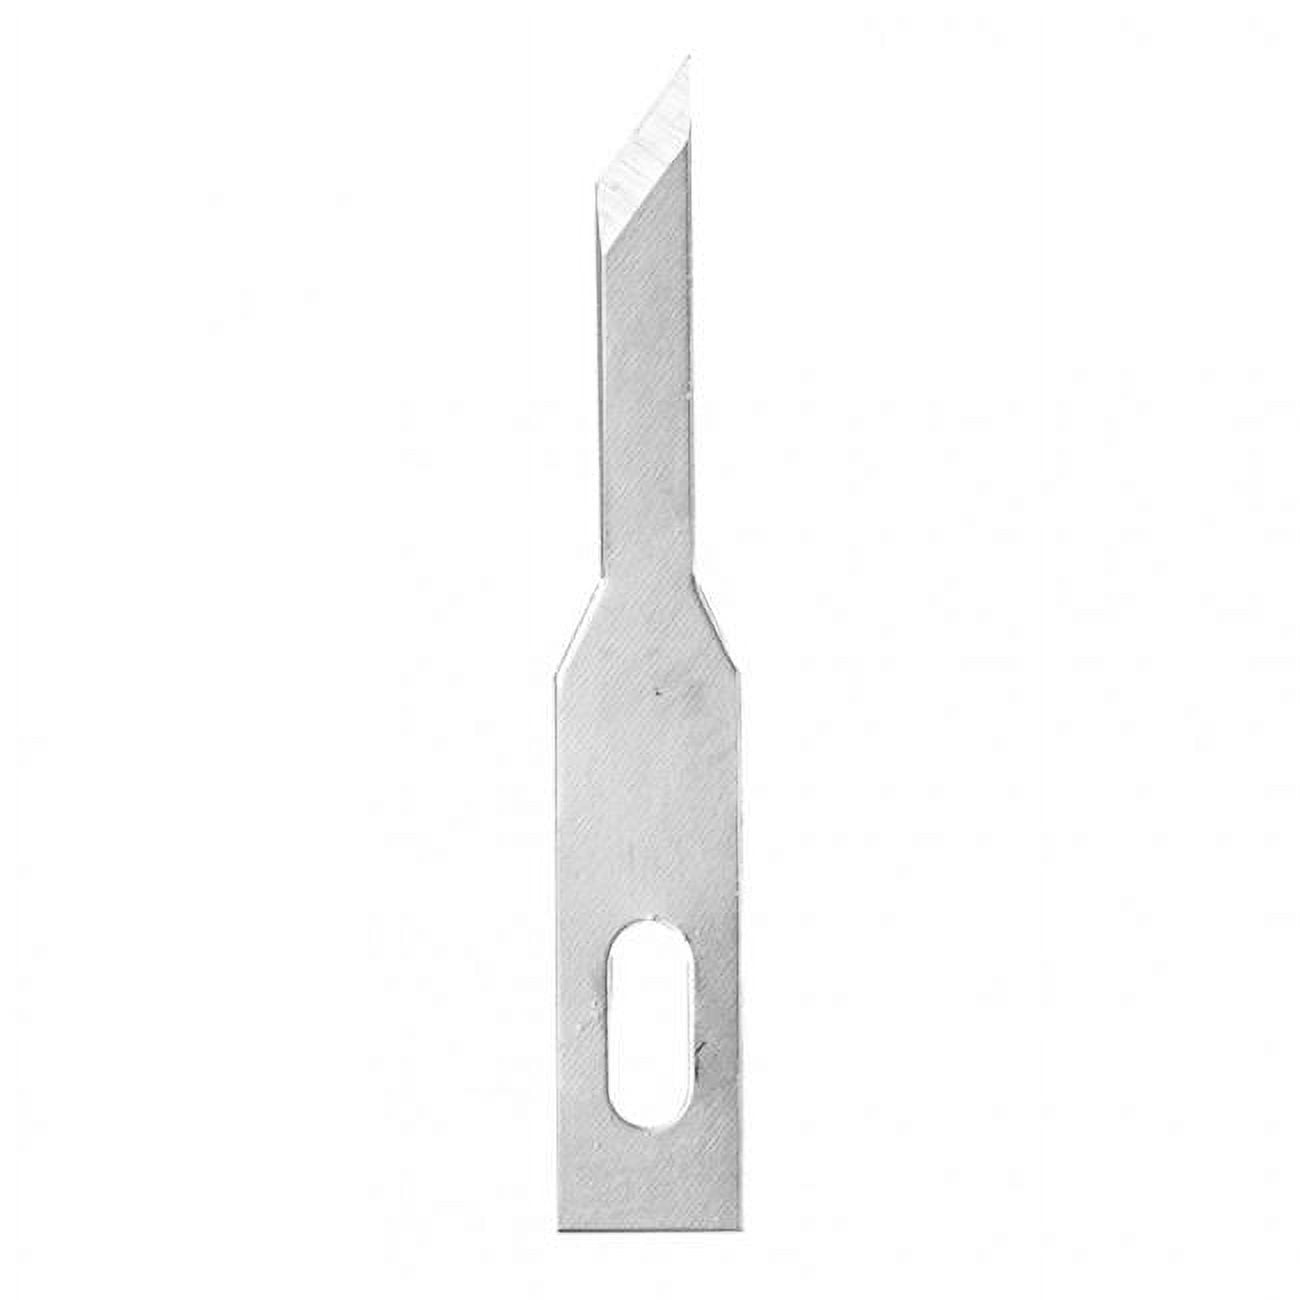 Vjp06005 68 Stencil Blades For Handle - Pack Of 5